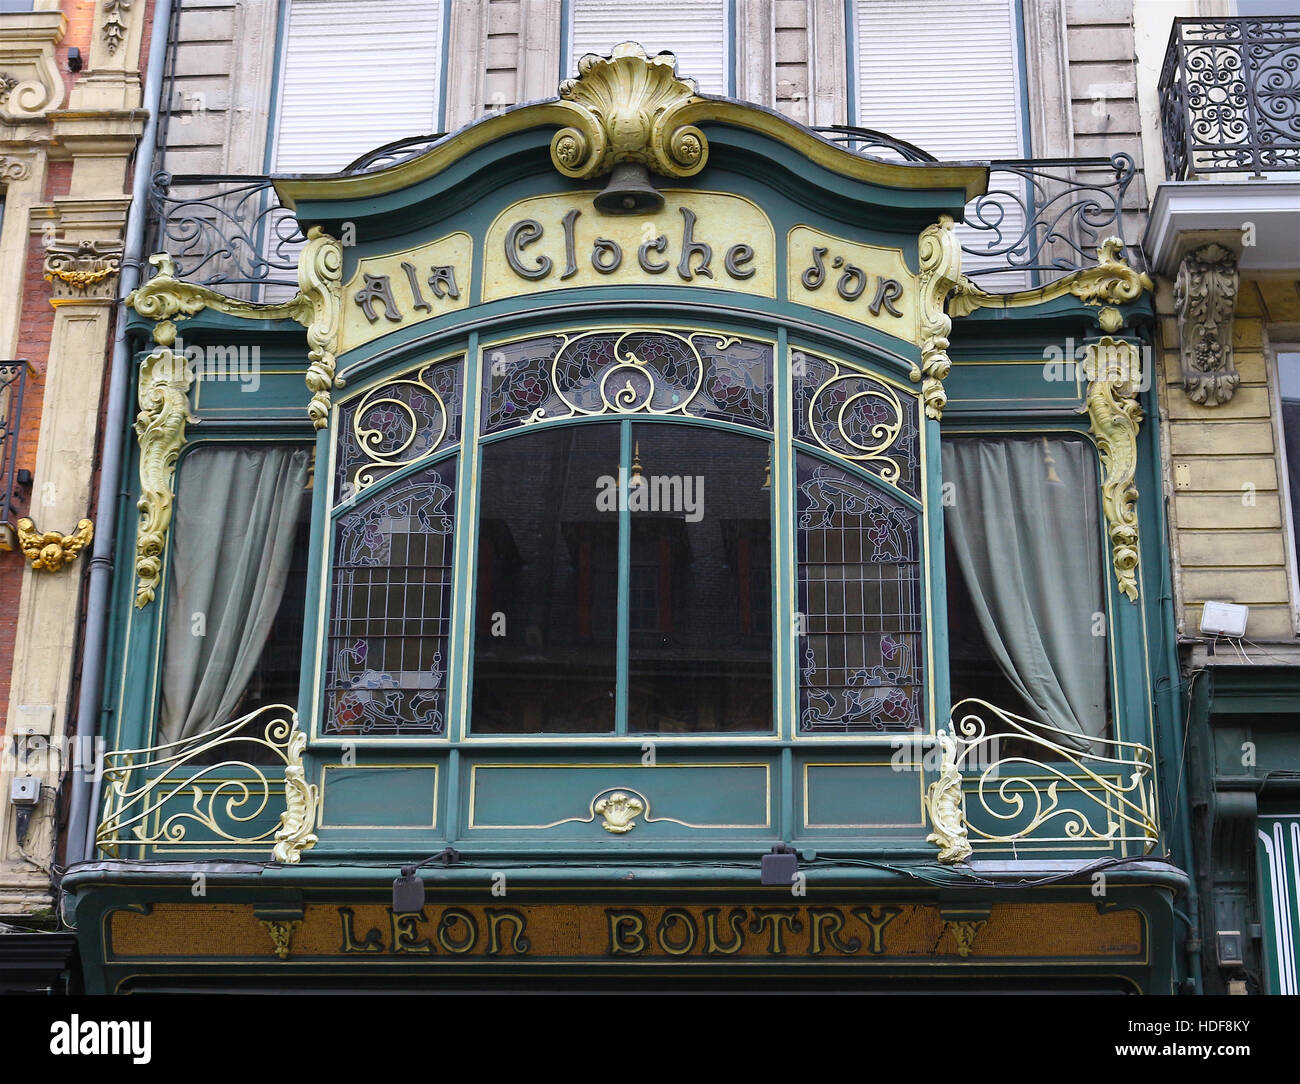 La Cloche d ' or, Lille, Frankreich. Schmuck Shop. Fassade im Art-Deco-Stil. Stockfoto